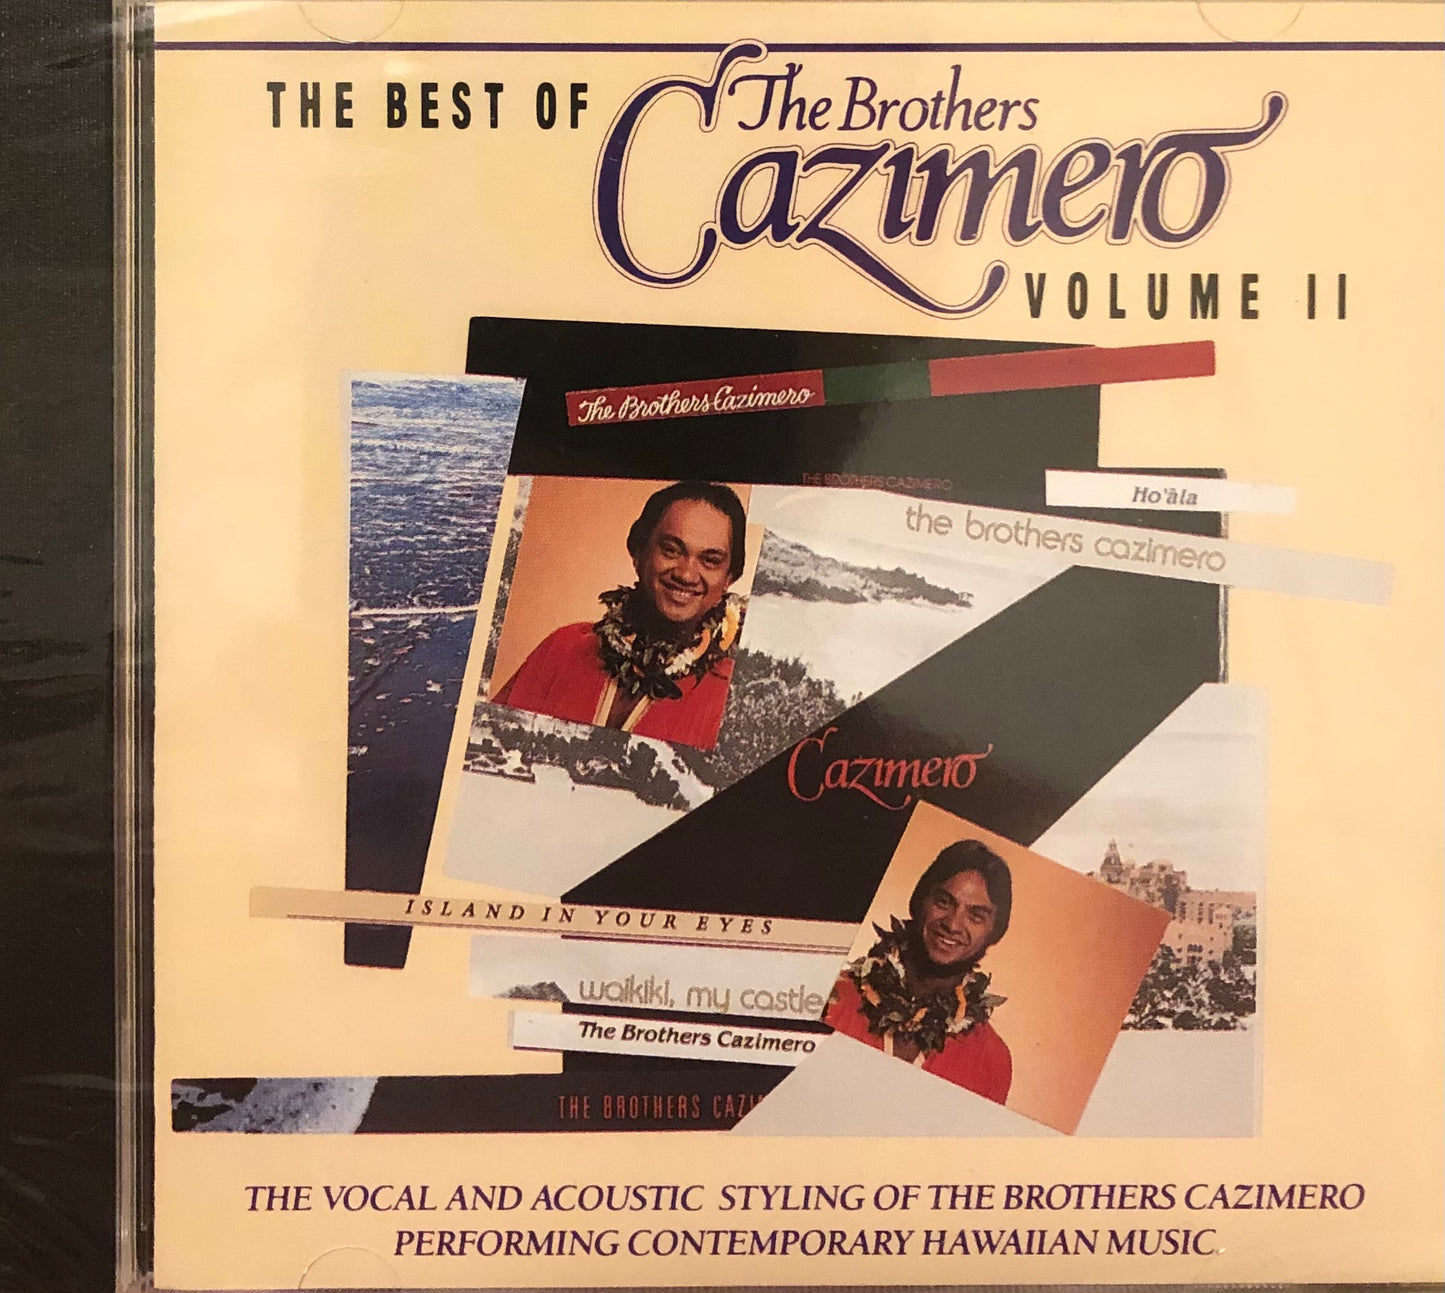 THE BROTHERS CAZIMERO VOLUME I I (1988)